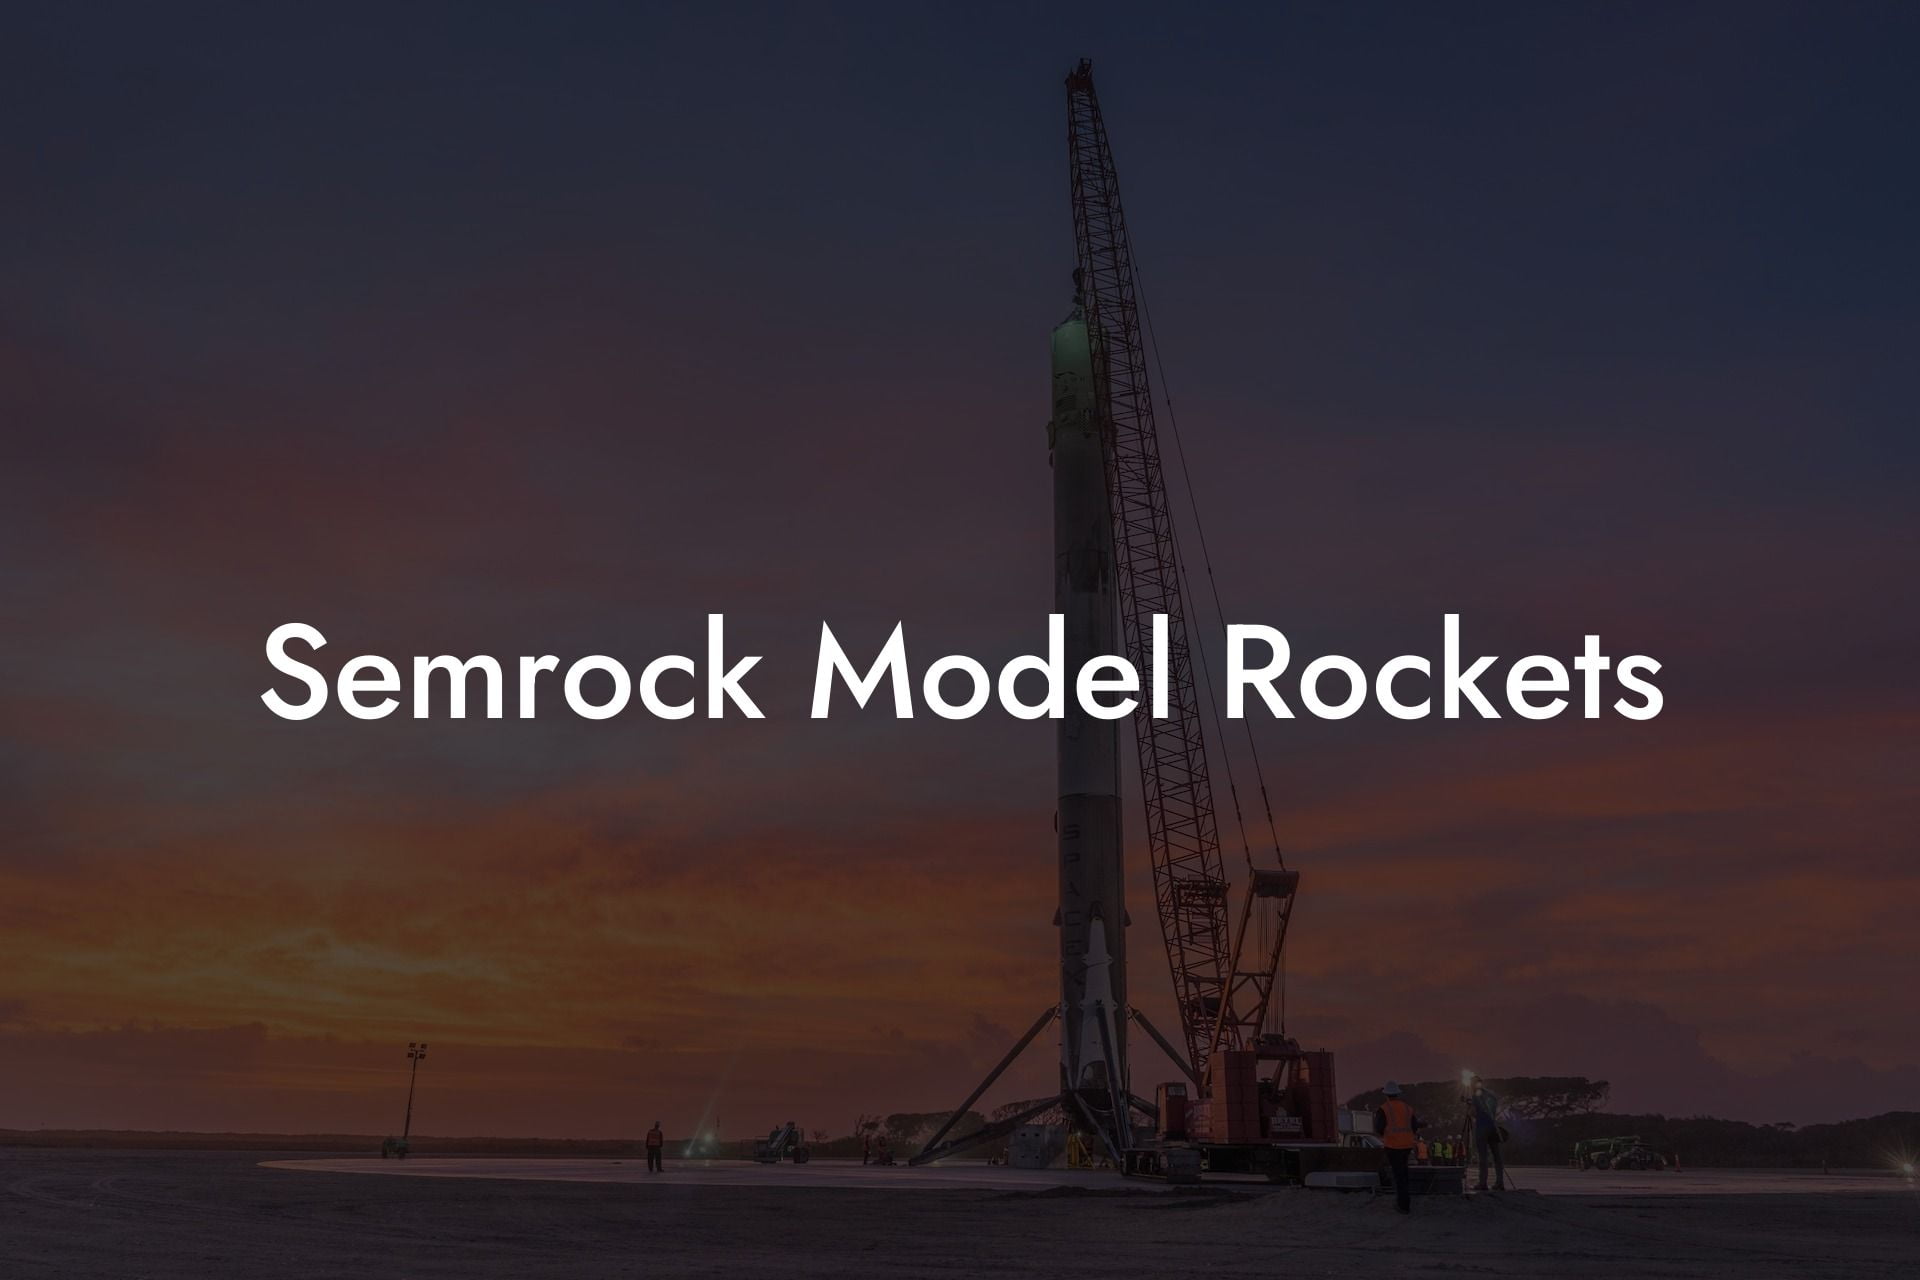 Semrock Model Rockets